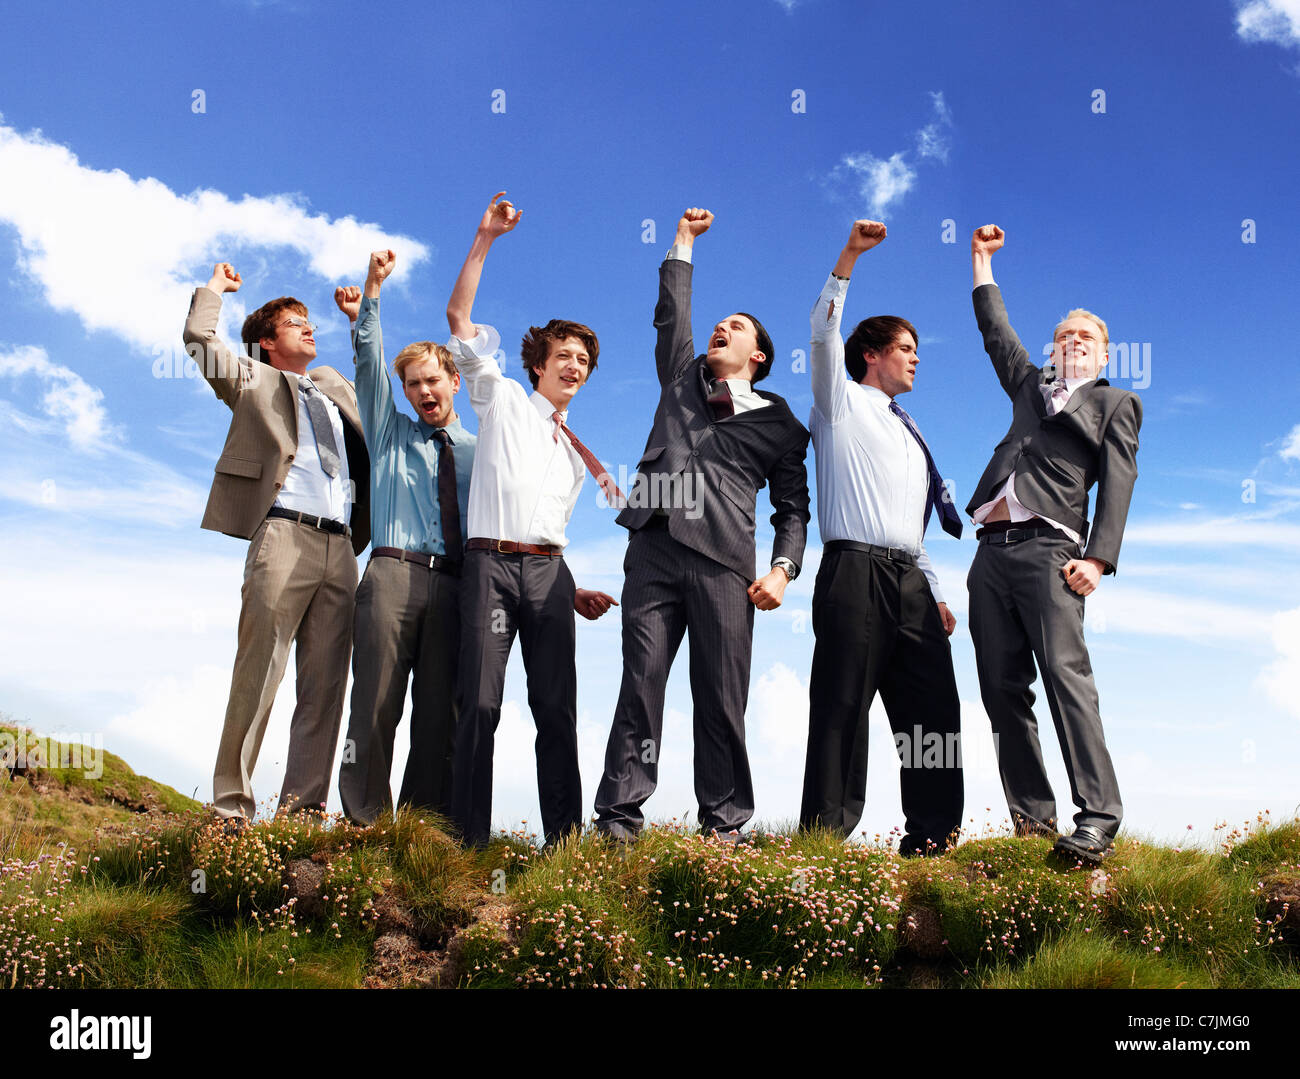 Businessmen cheering outdoors Stock Photo